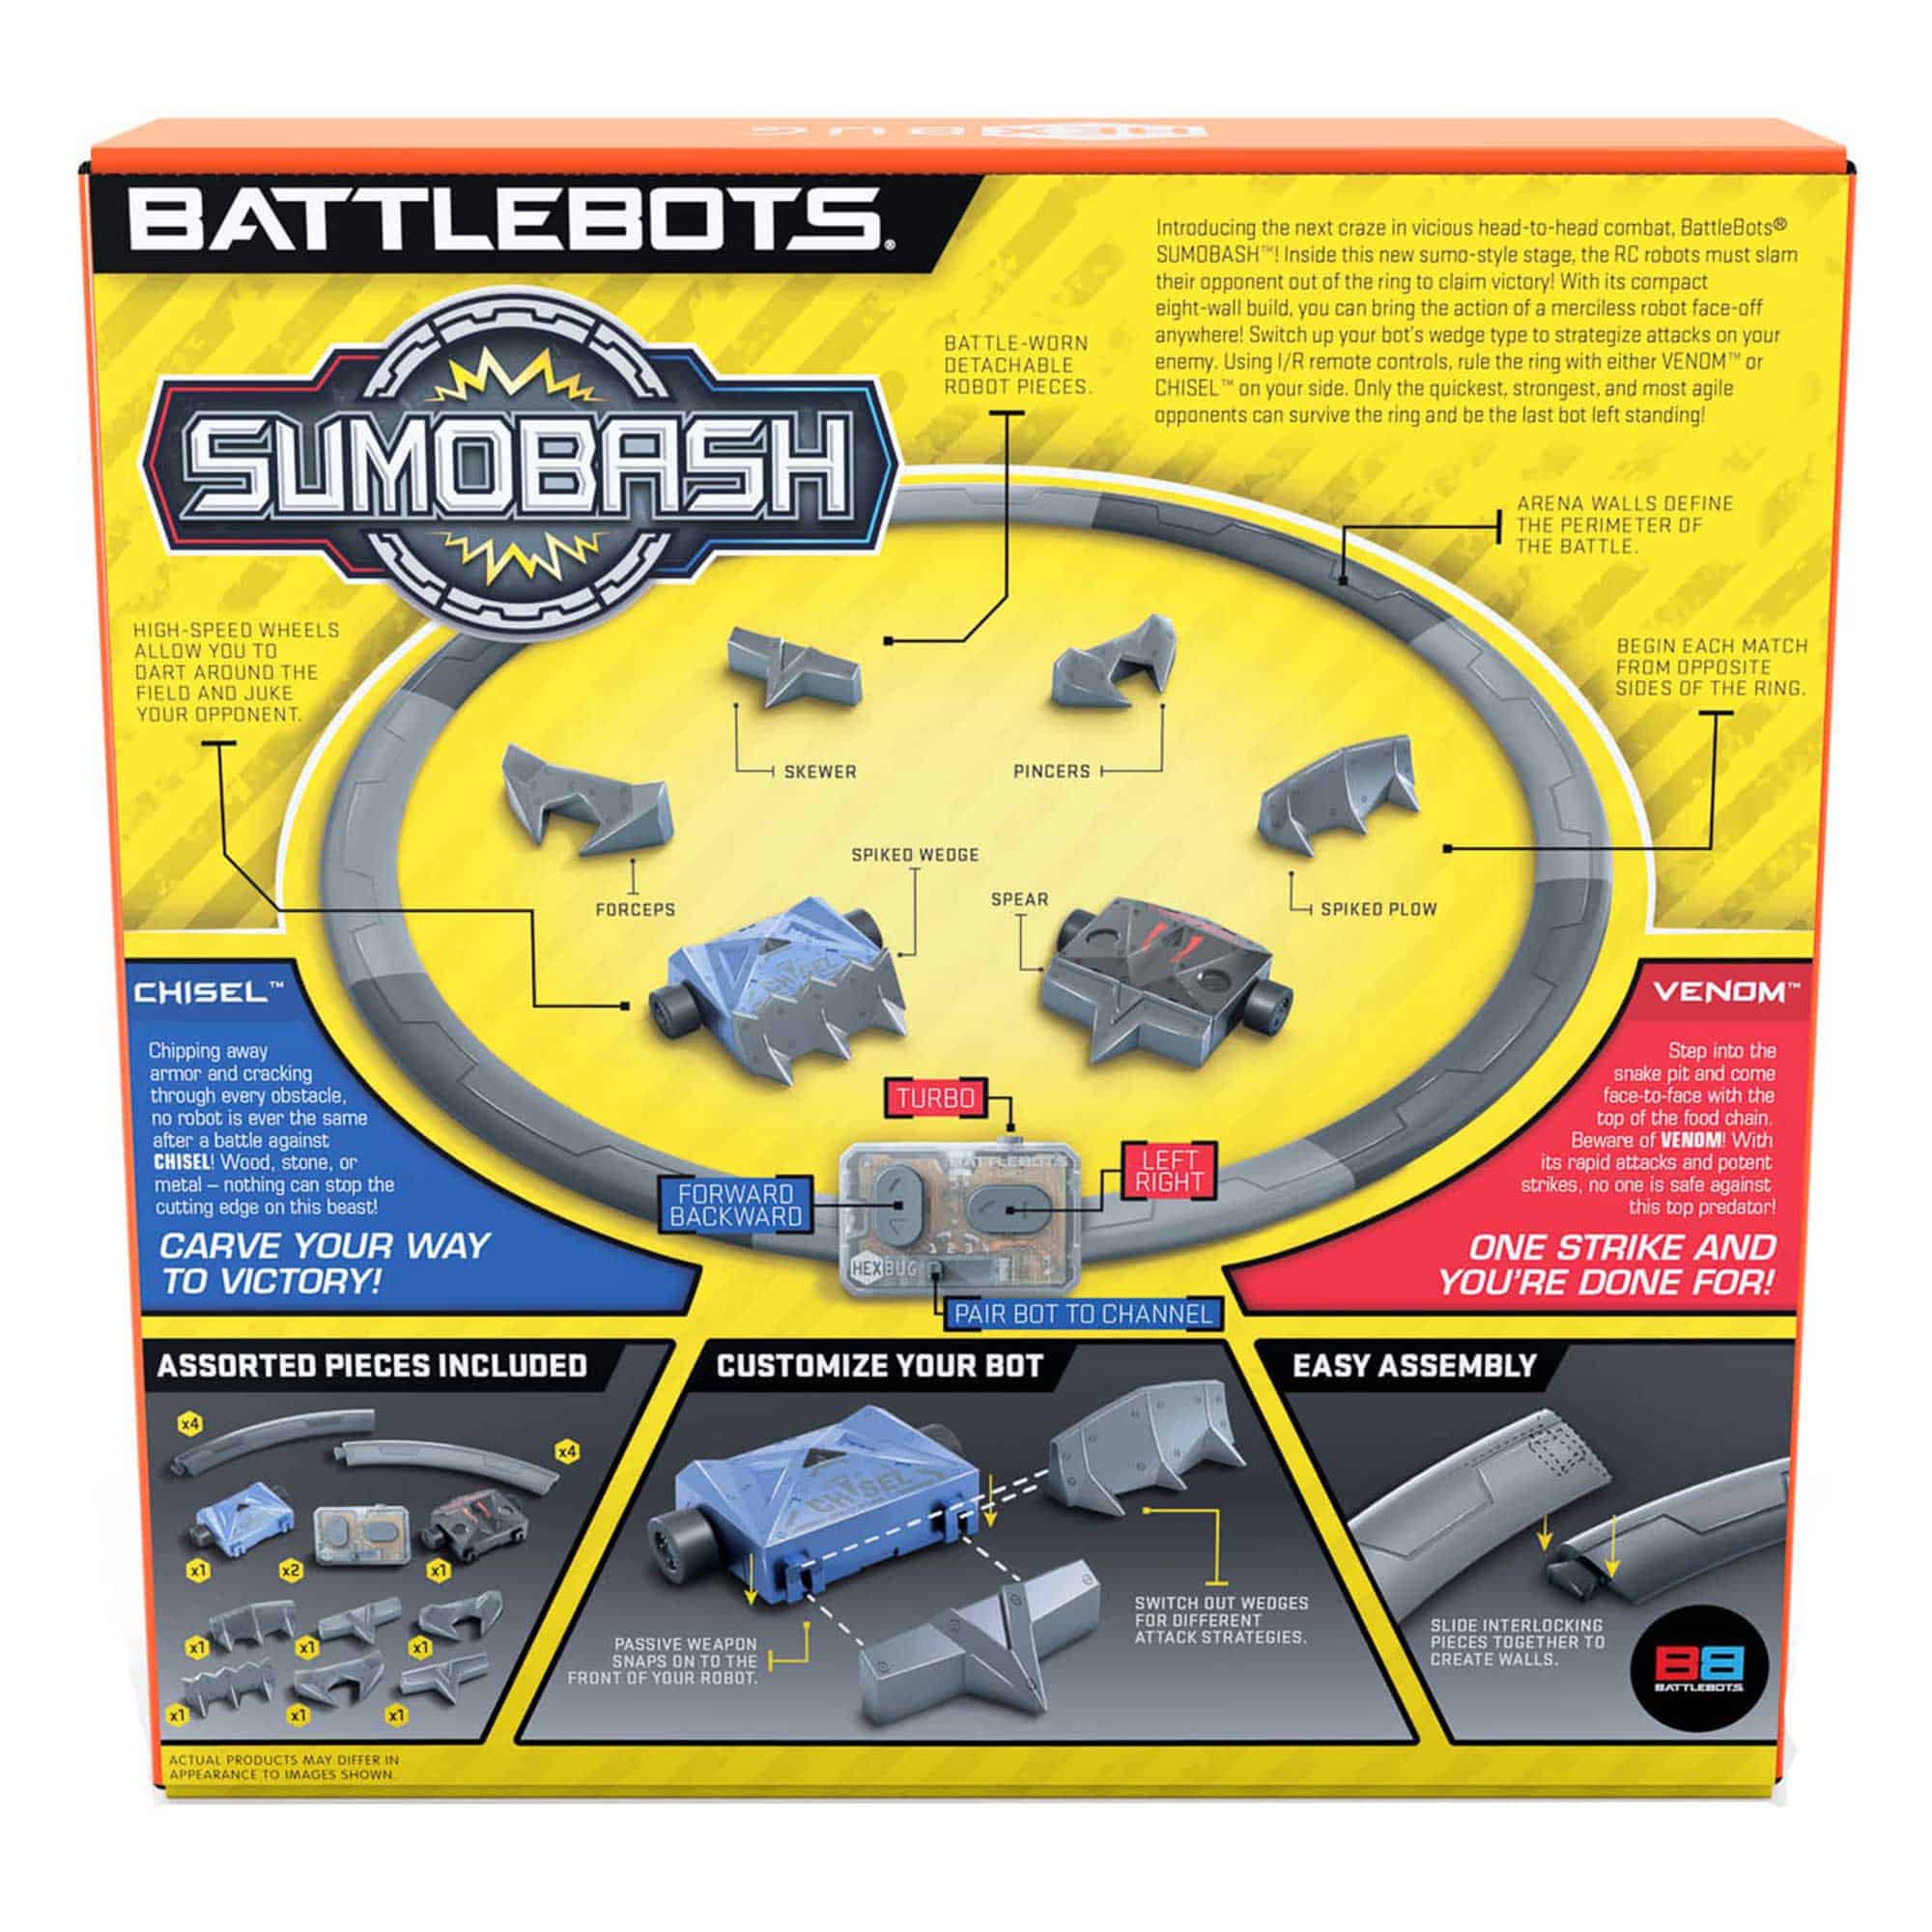 HEXBUG - BattleBots SumoBash Robots